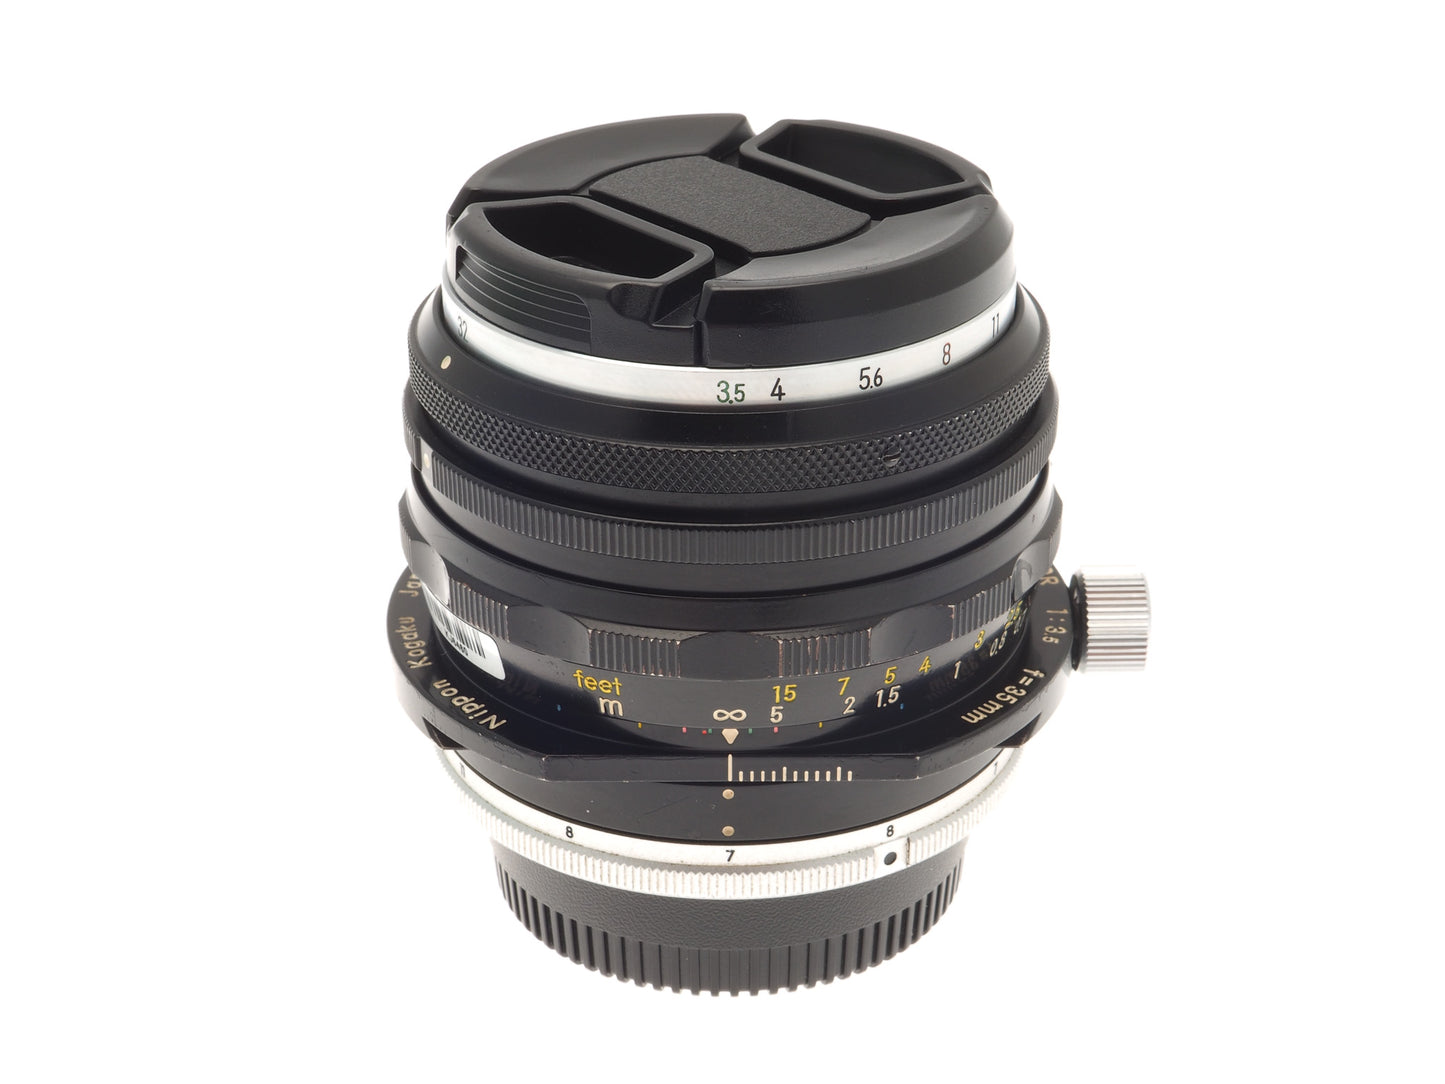 Nikon 35mm f3.5 PC-Nikkor - Lens